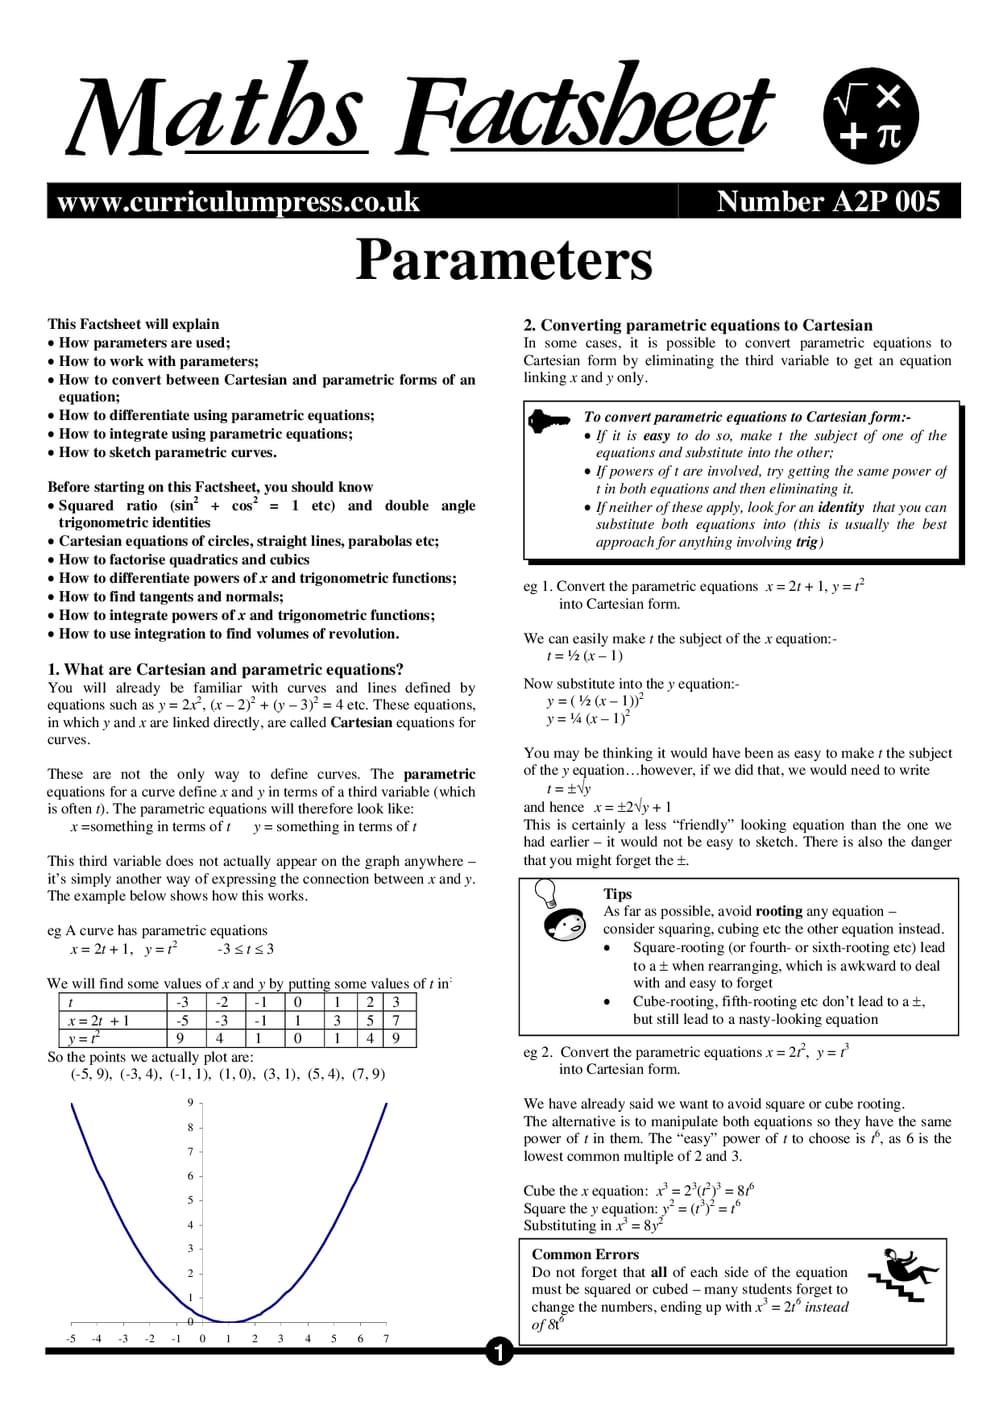 A2P 005 Parameters